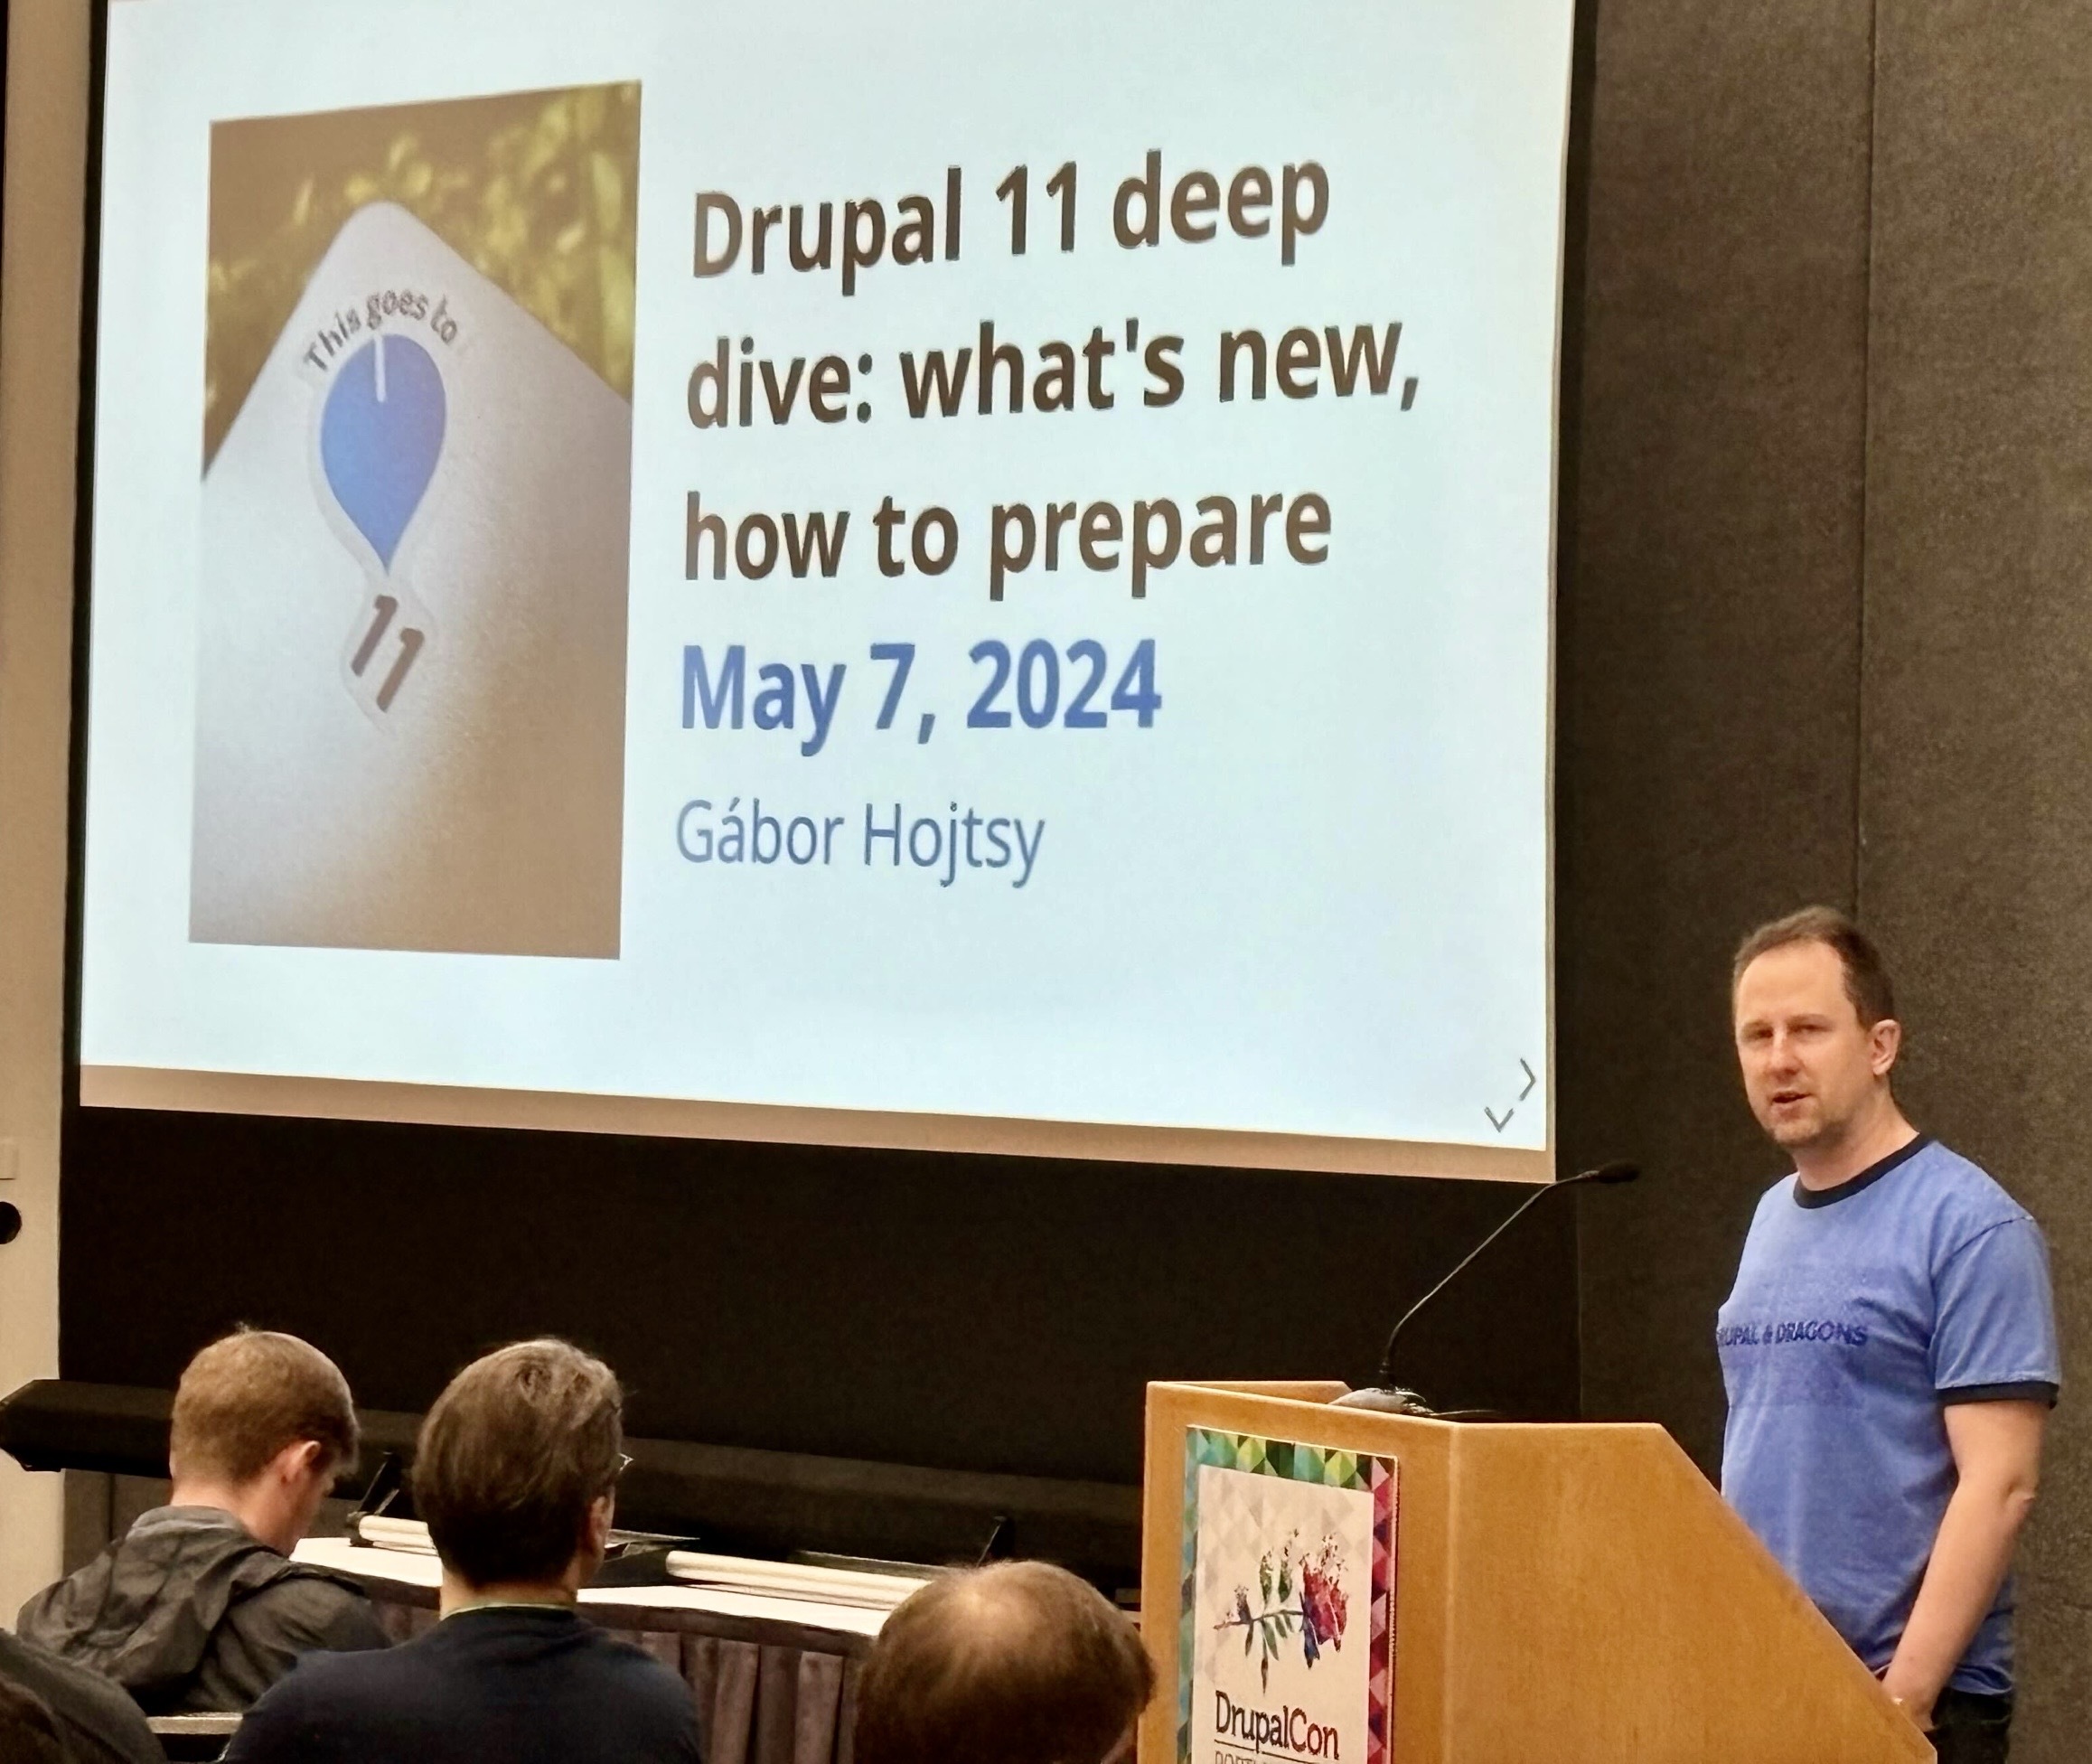 Gabor's Drupal 11 talk